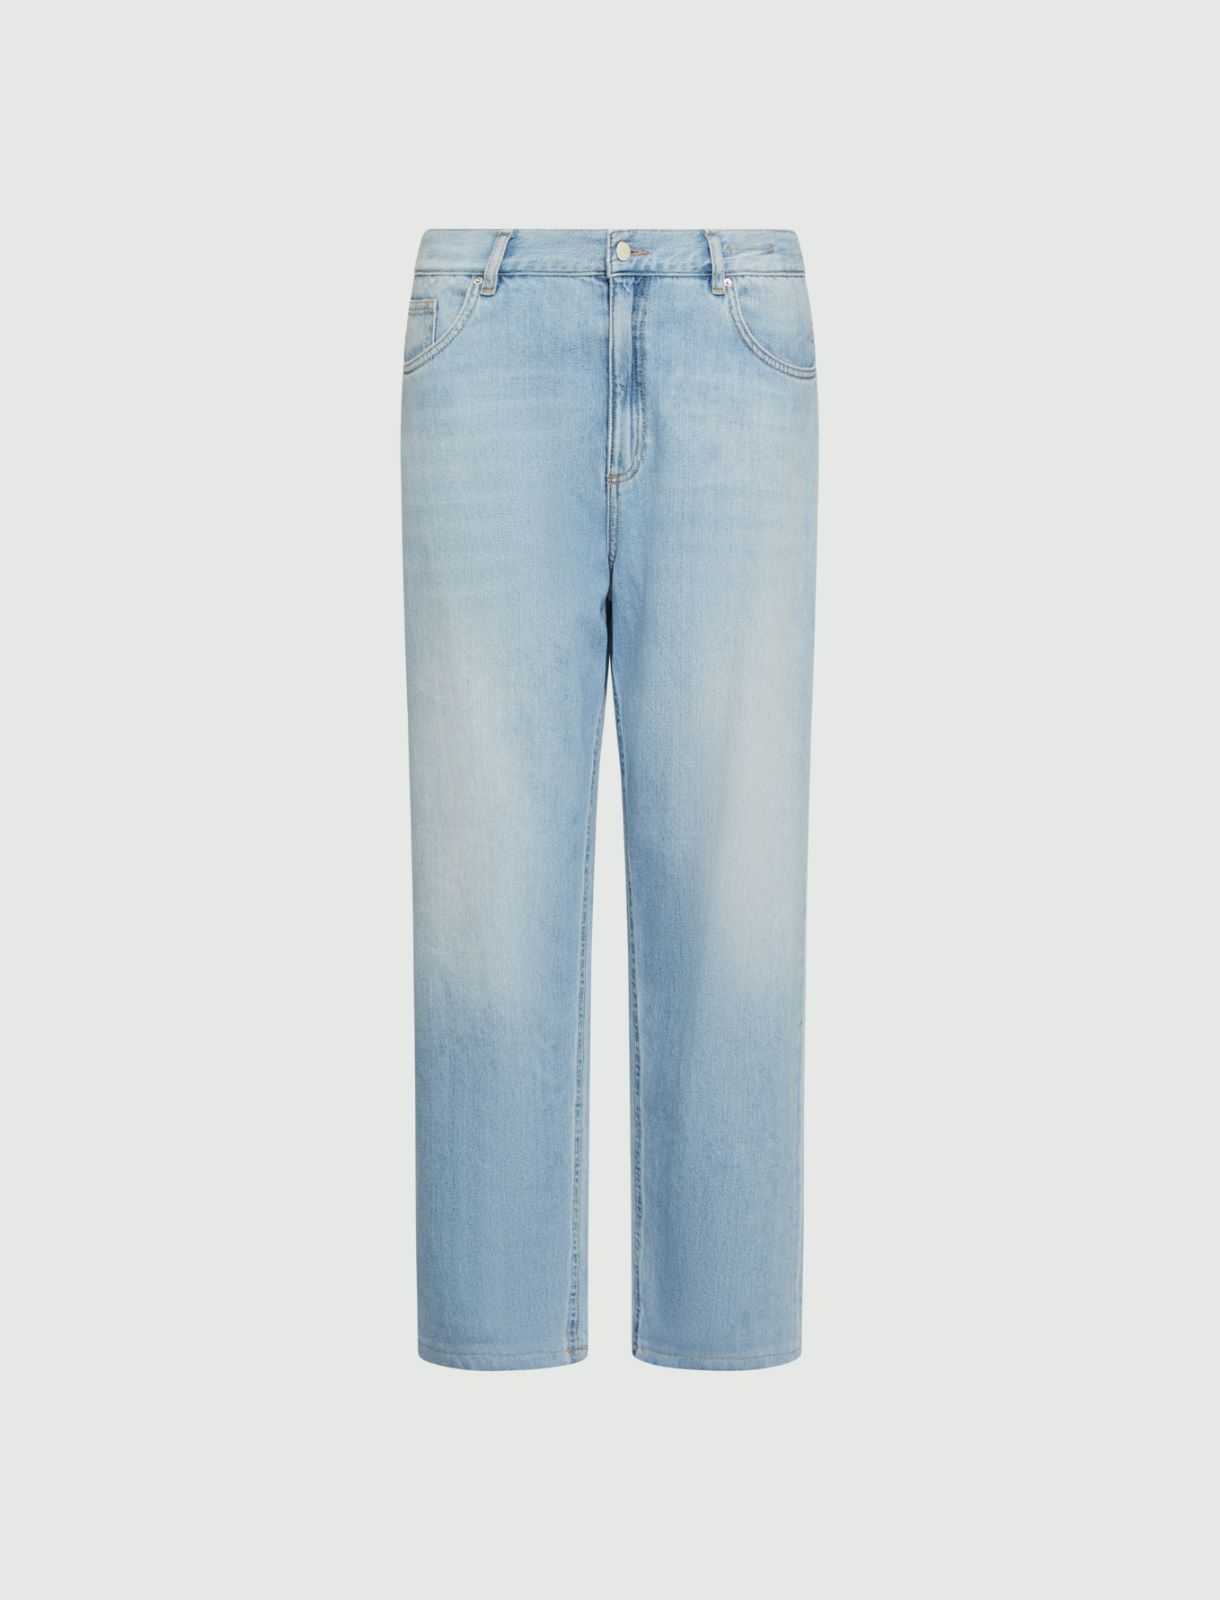 Tomboy jeans - Blue jeans - Marella